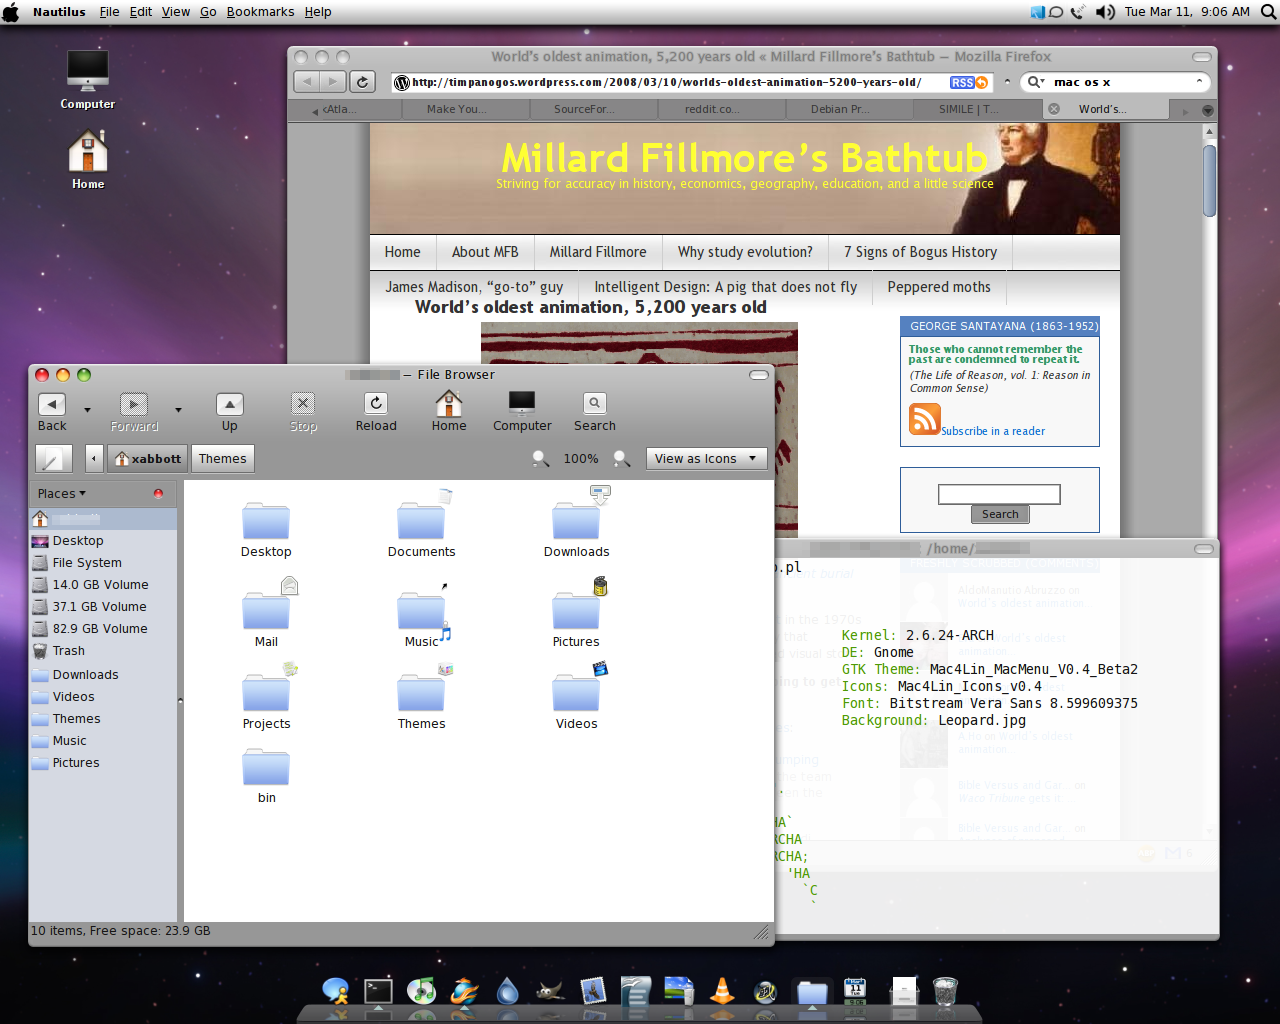 mac4lin-desktop